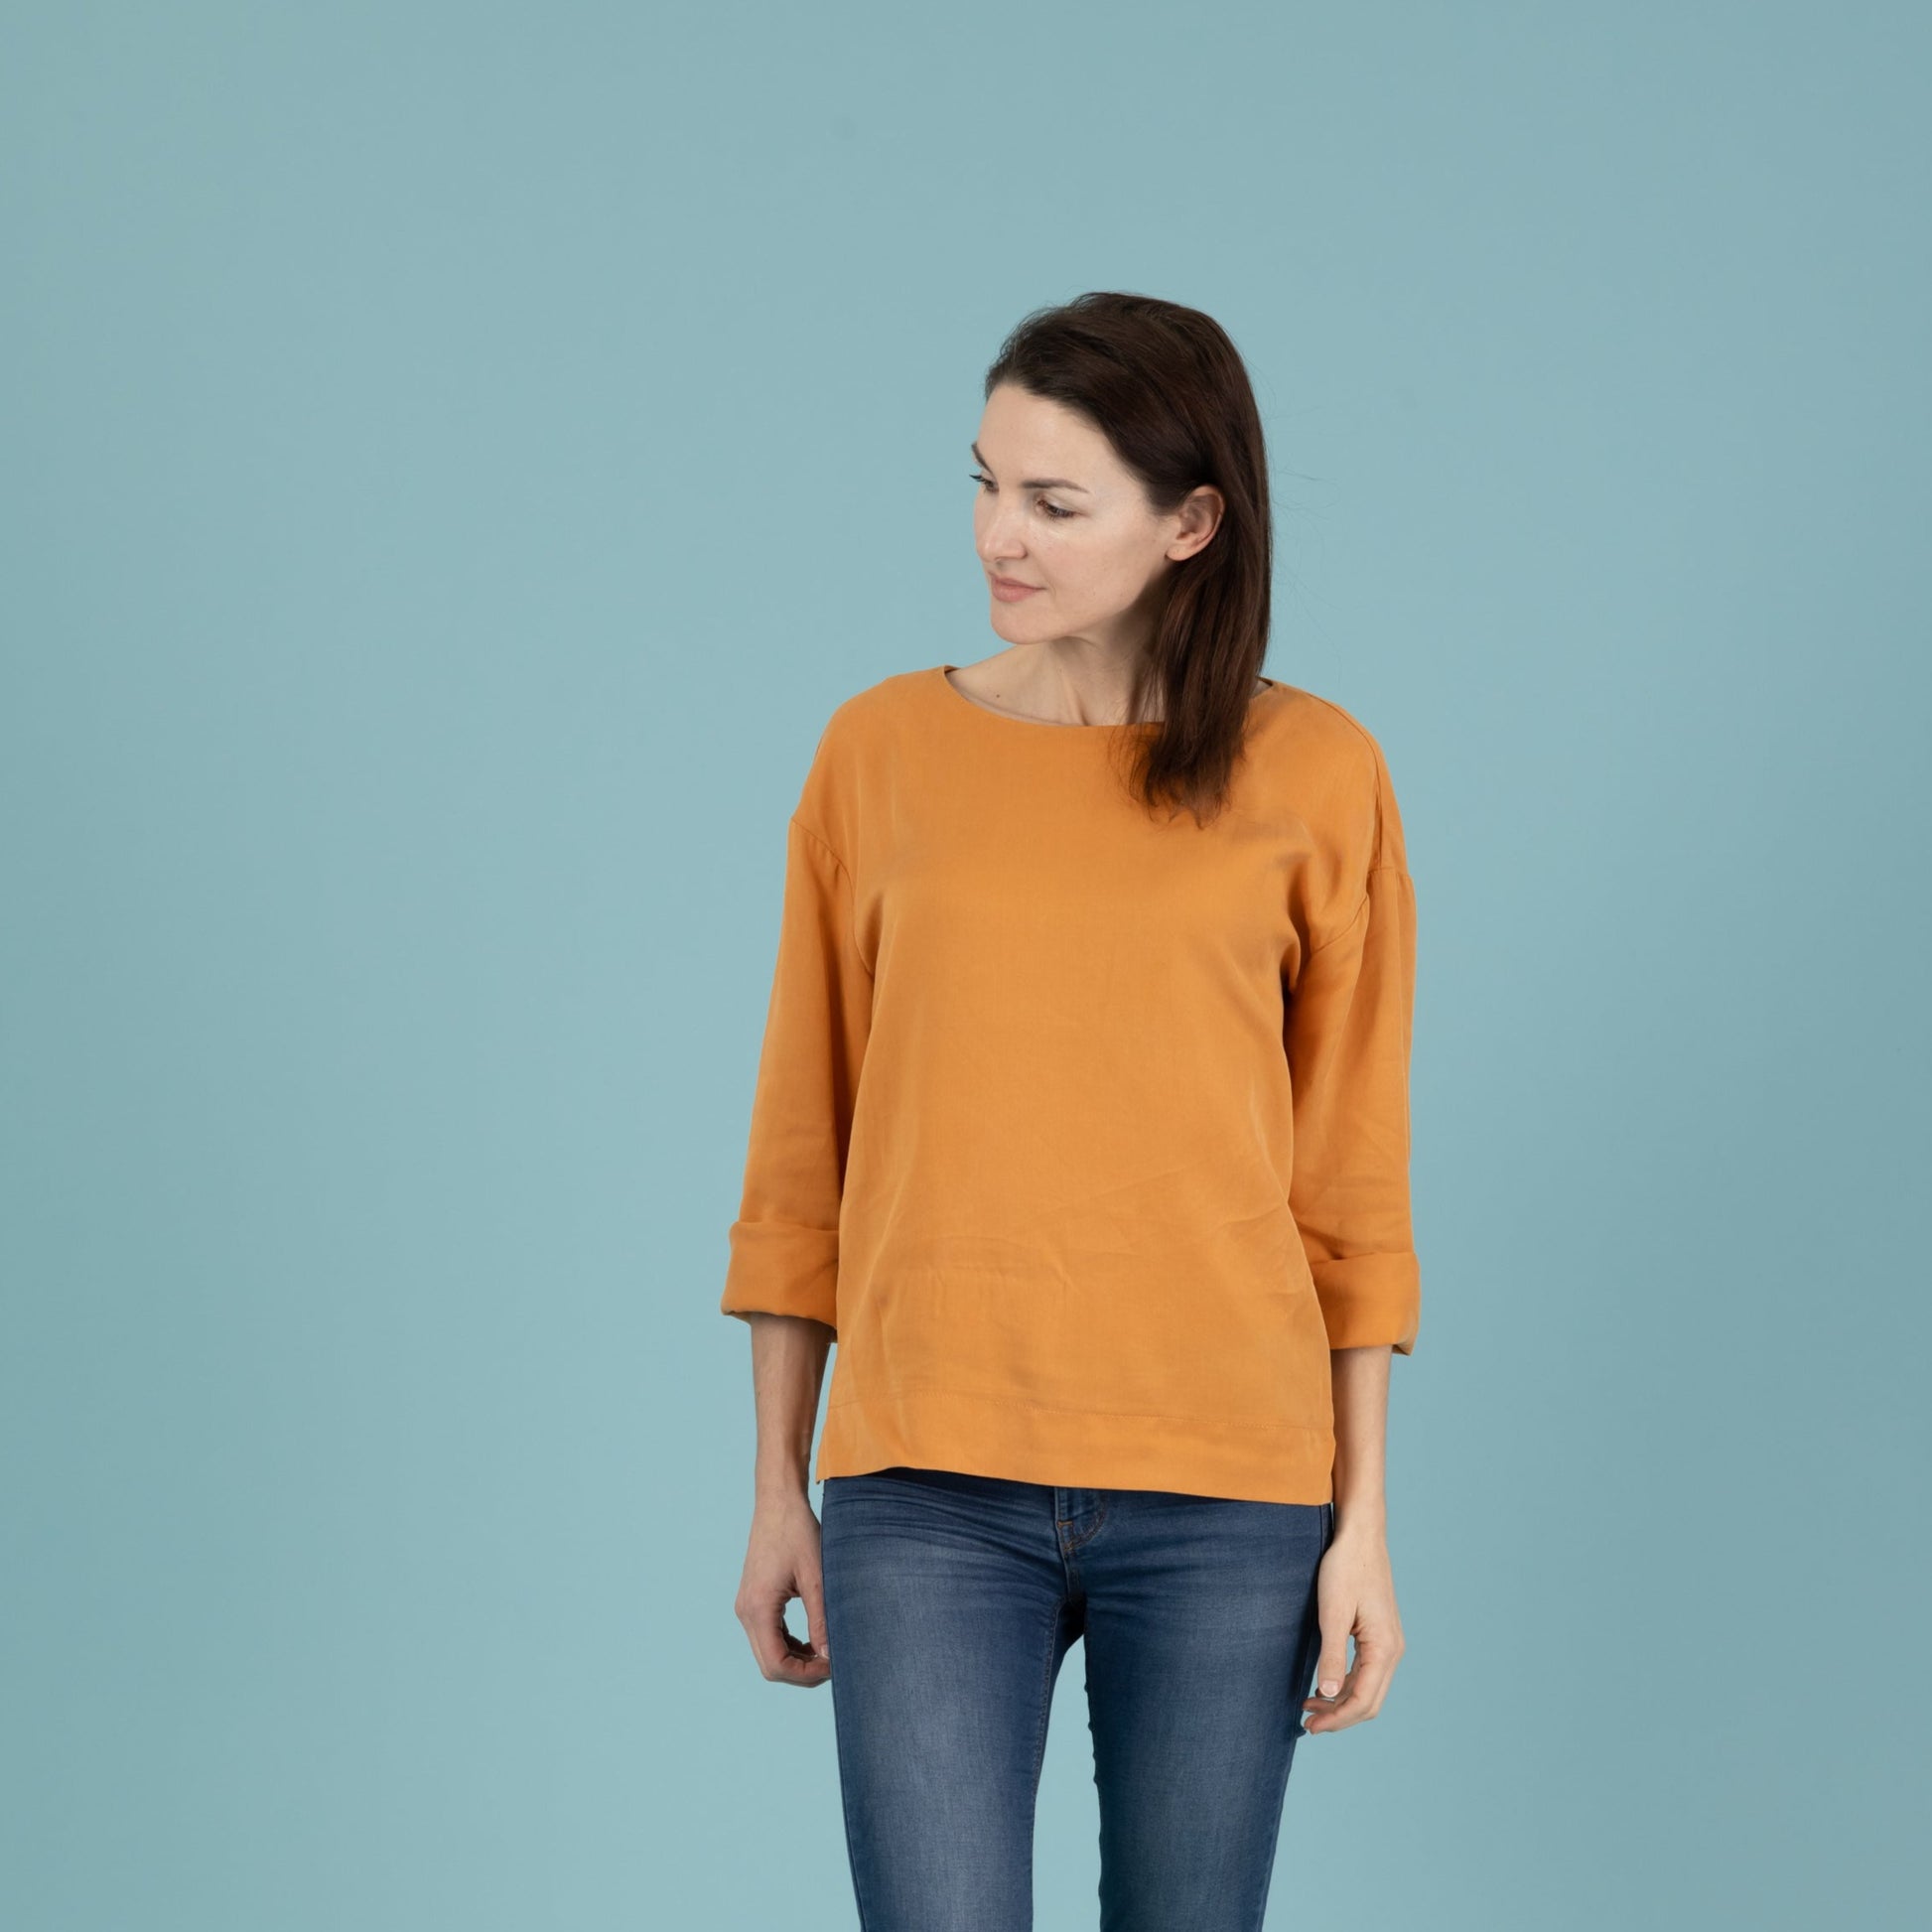 Tencel Damenshirt in der Farbe Mango, Urheber: Mini & Eve